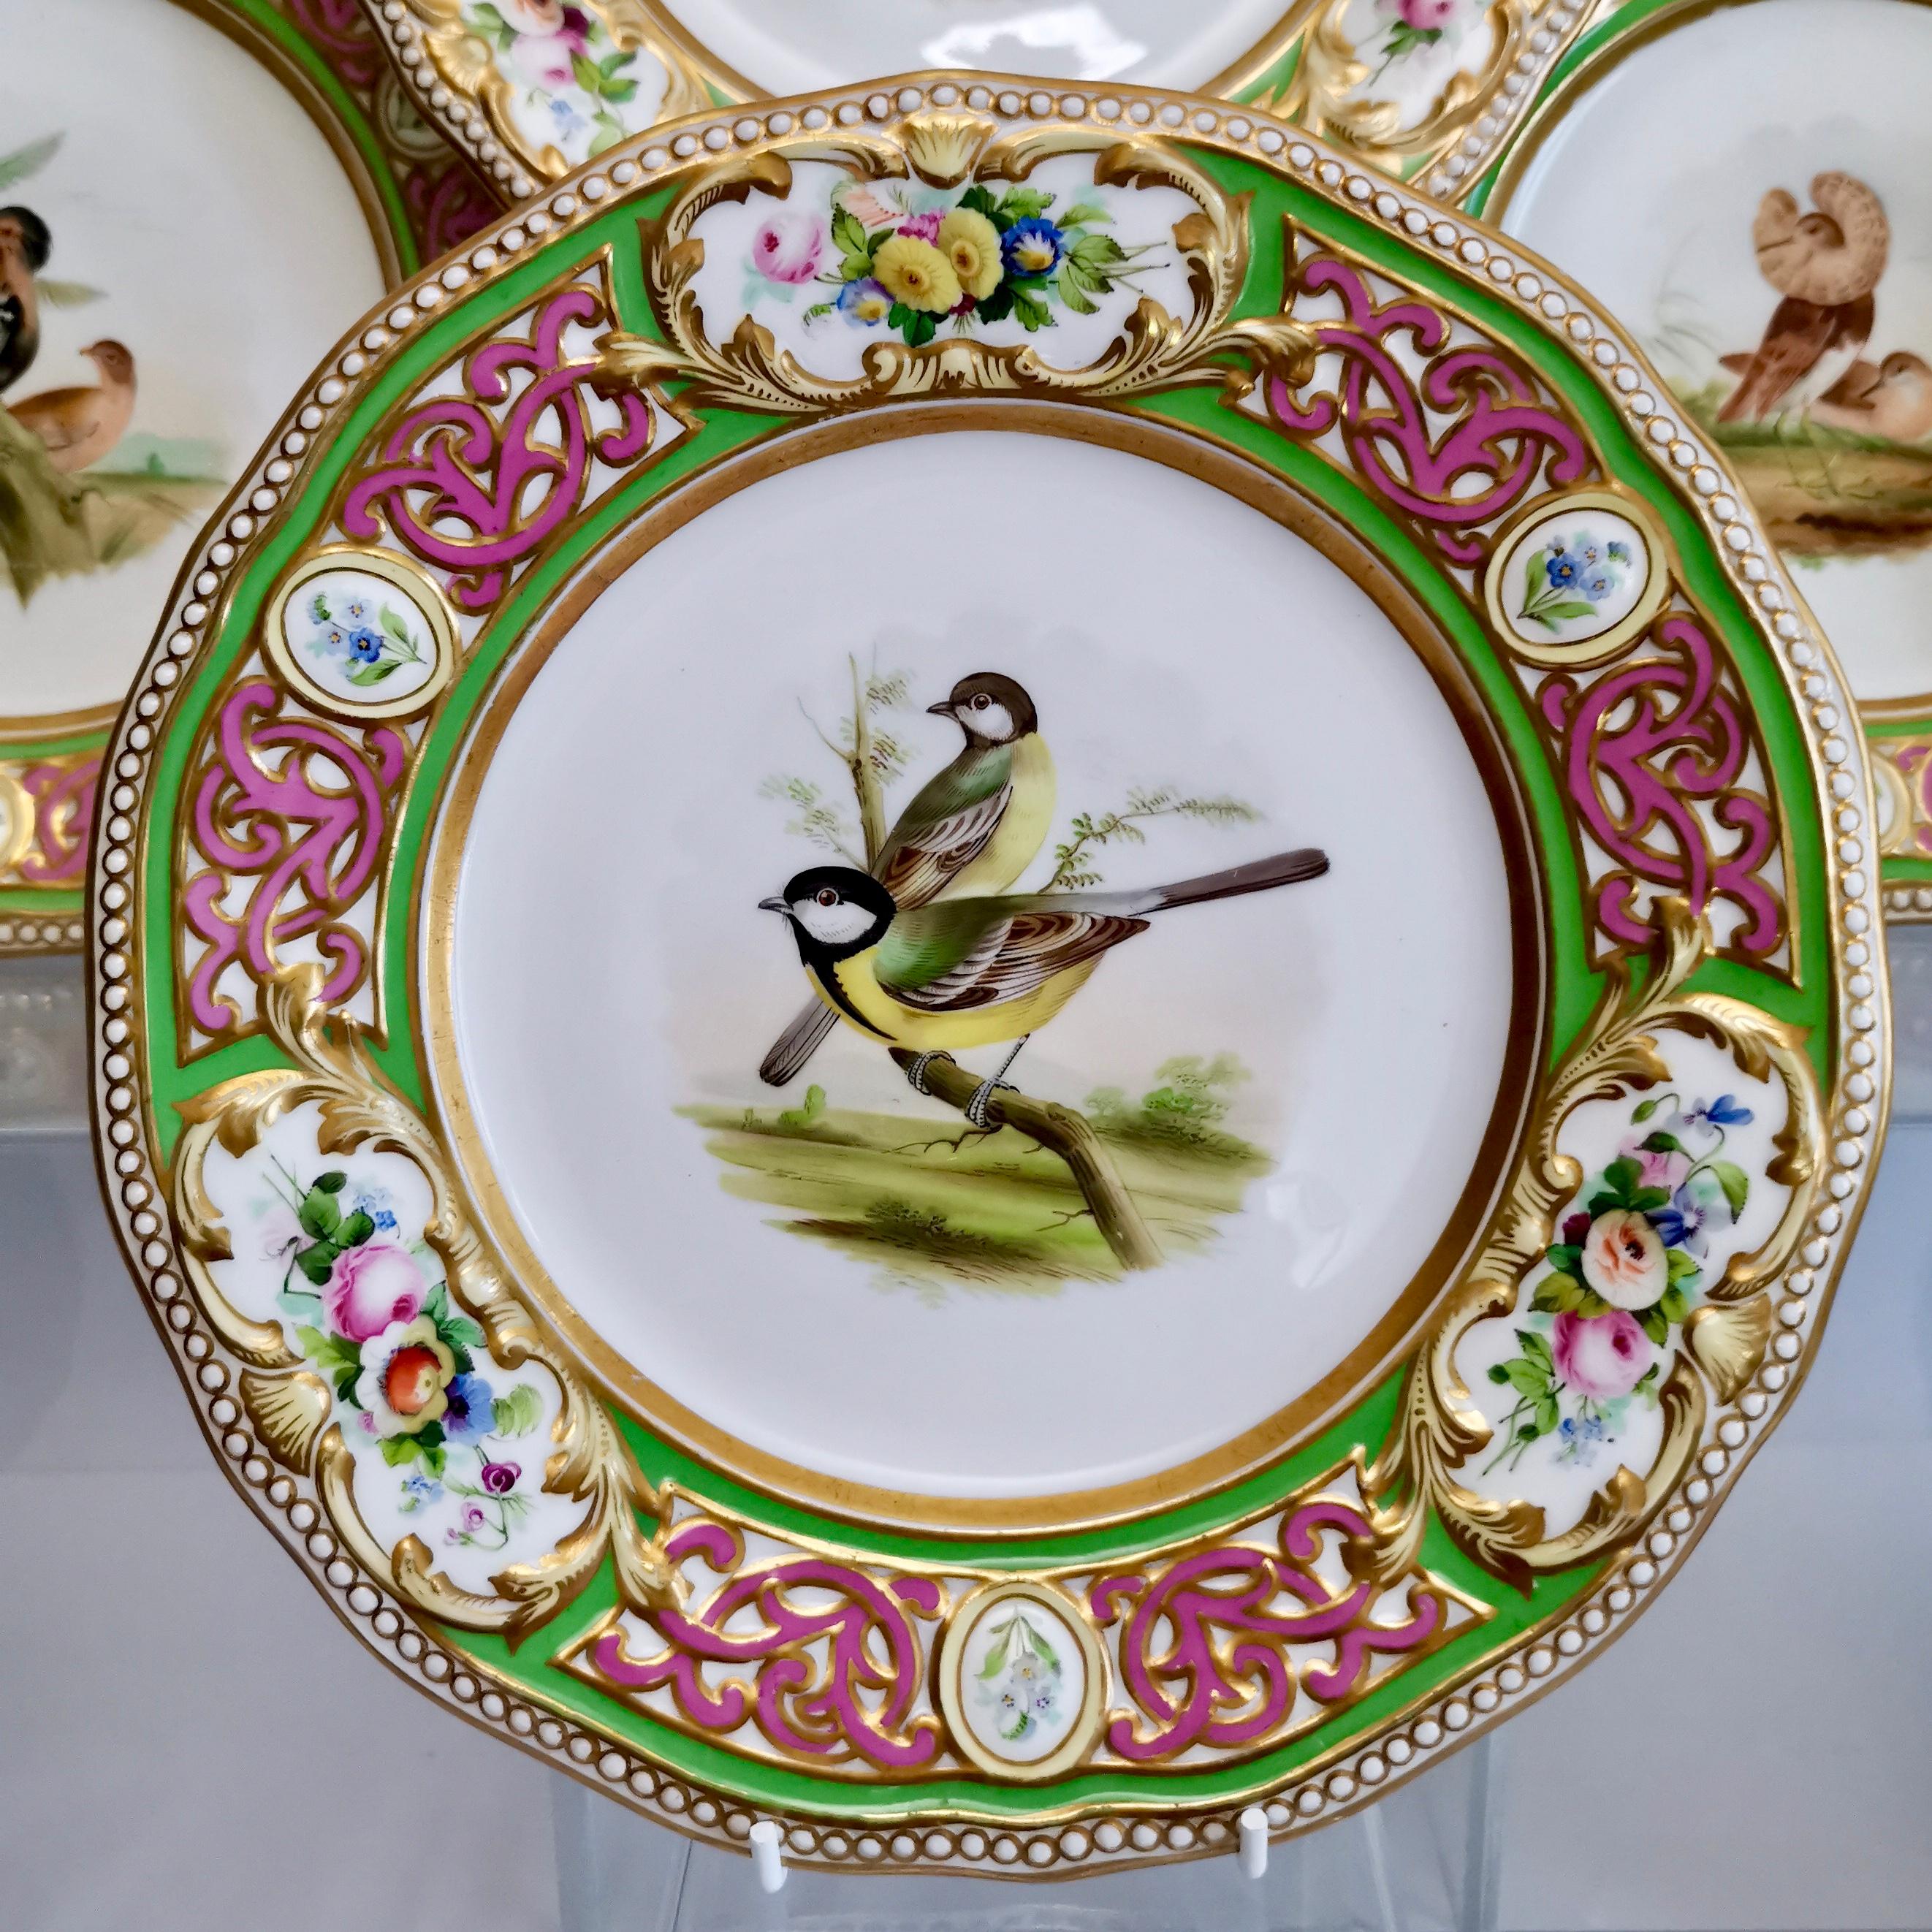 Grainger Worcester Porcelain Dessert Service, Persian Revival with Birds, 1855 2